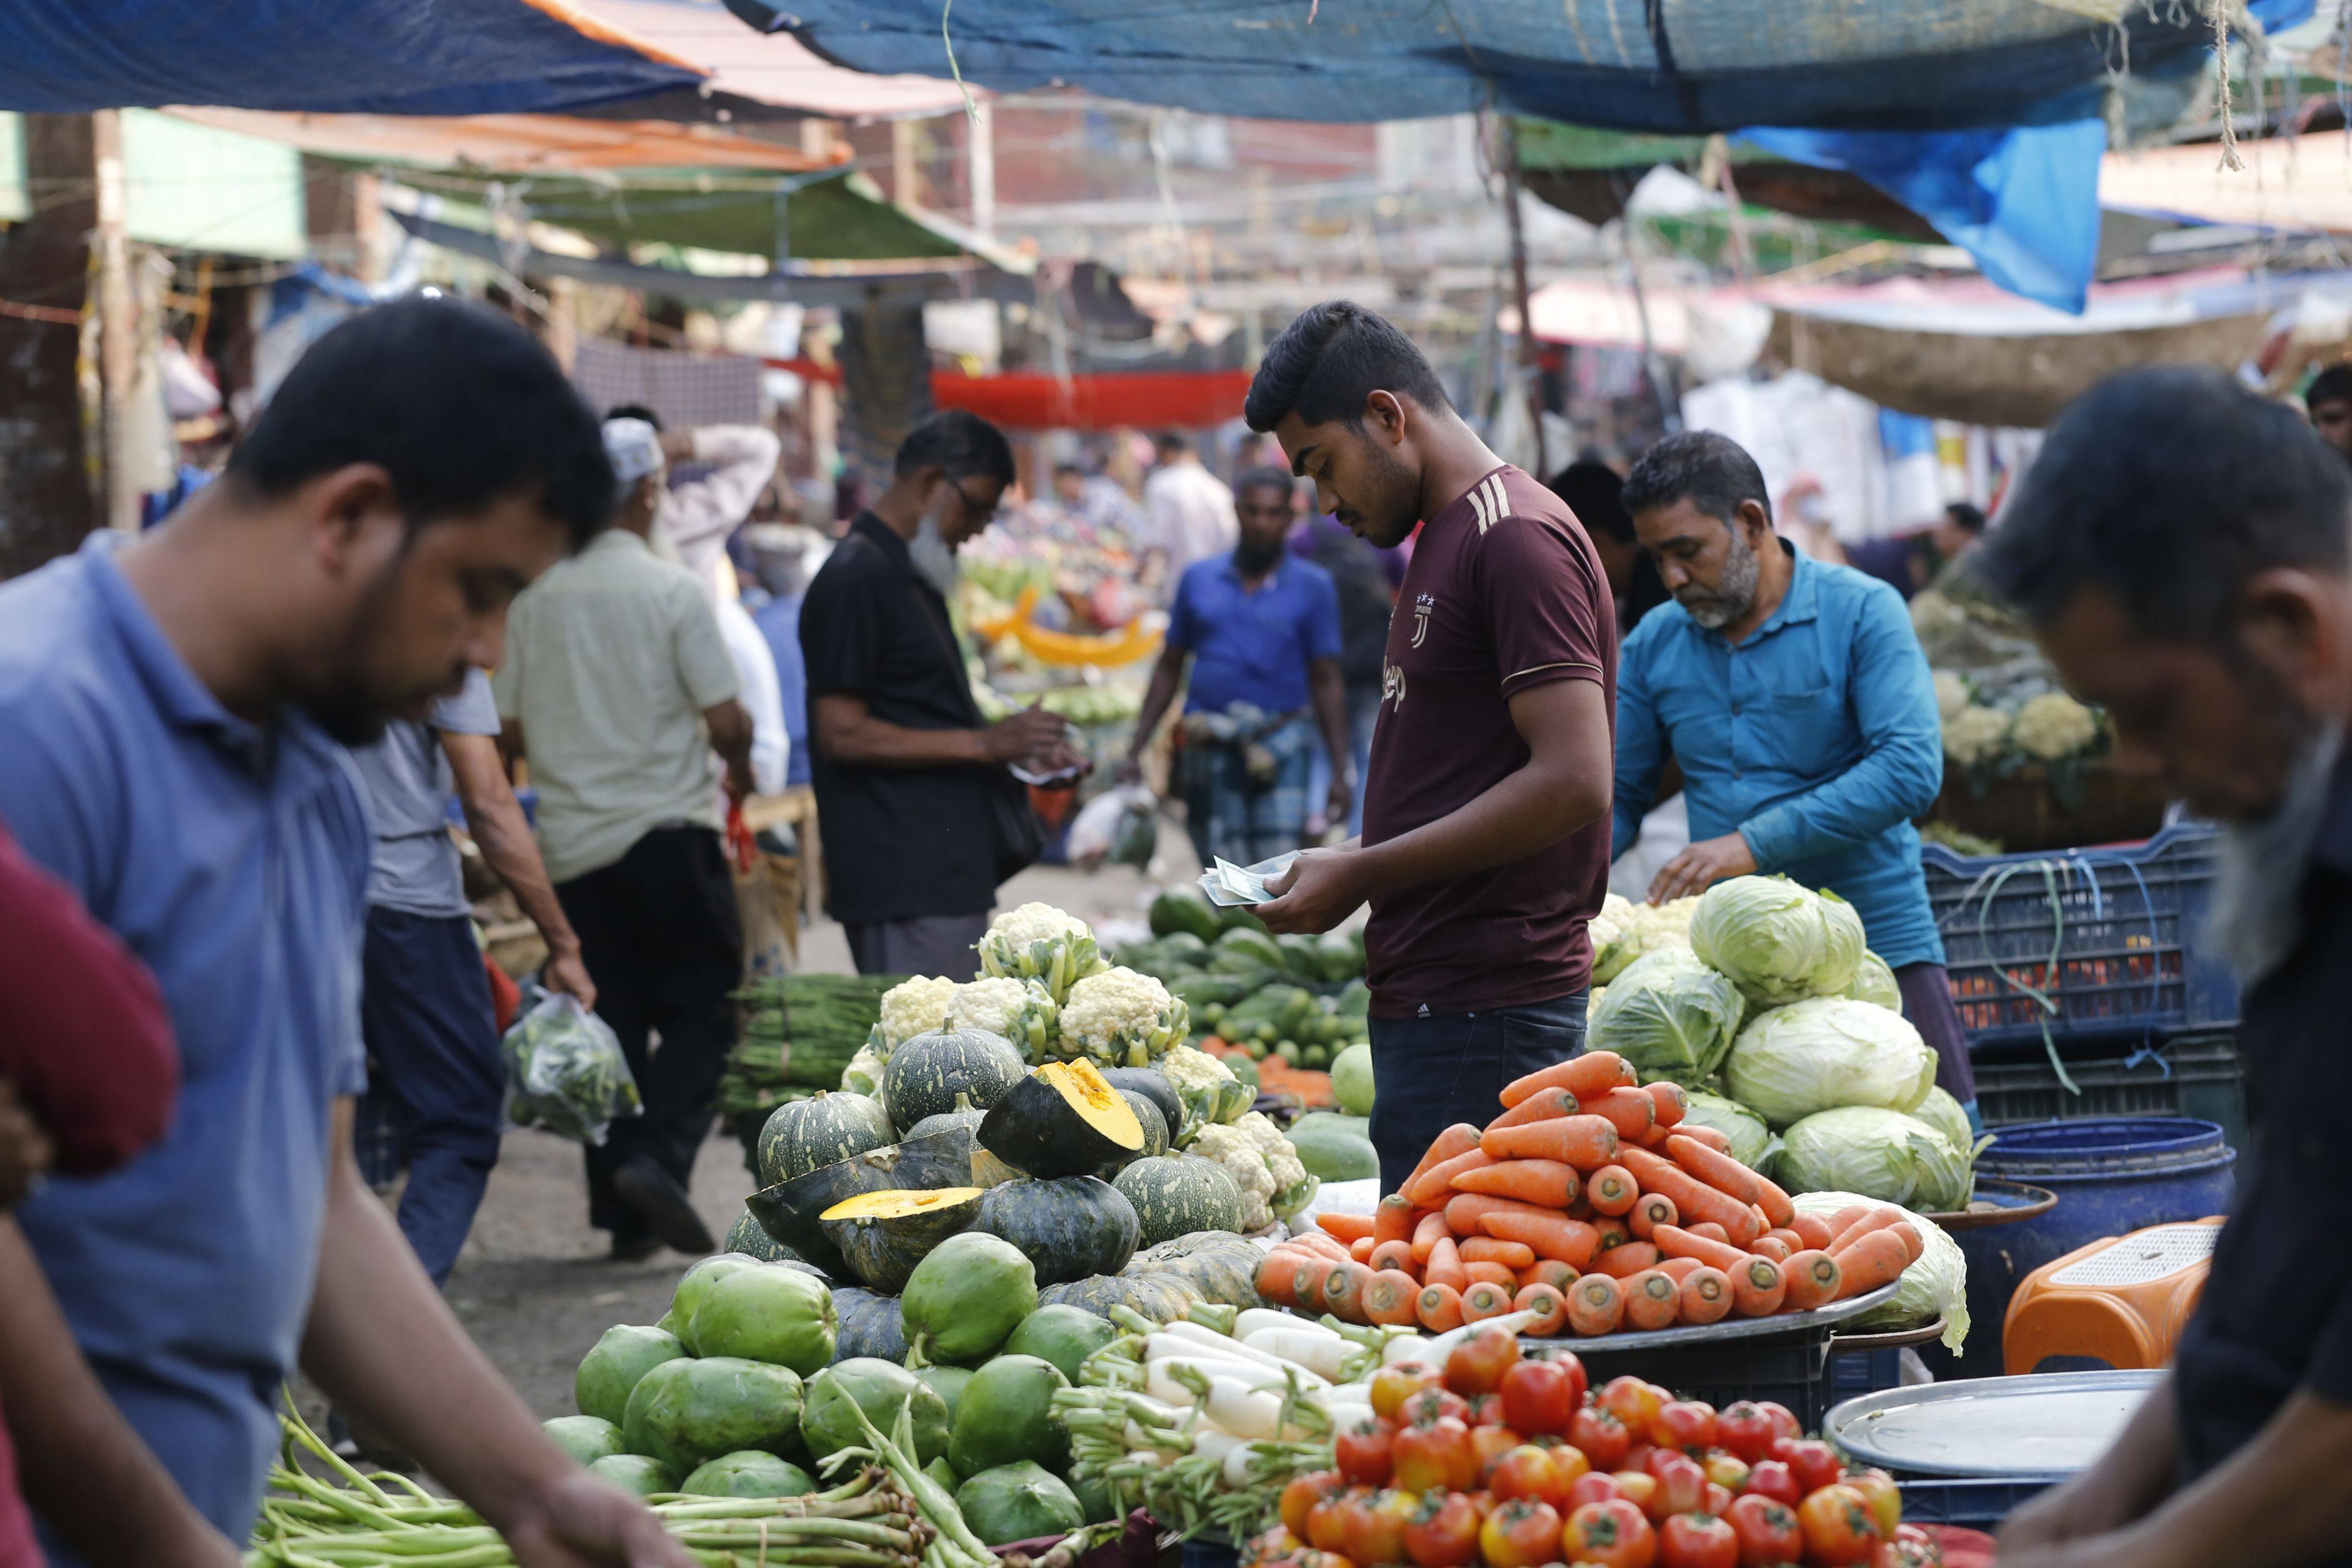 Shoppers buy produce at a market in Bangladesh. Photo: Rehman Asad